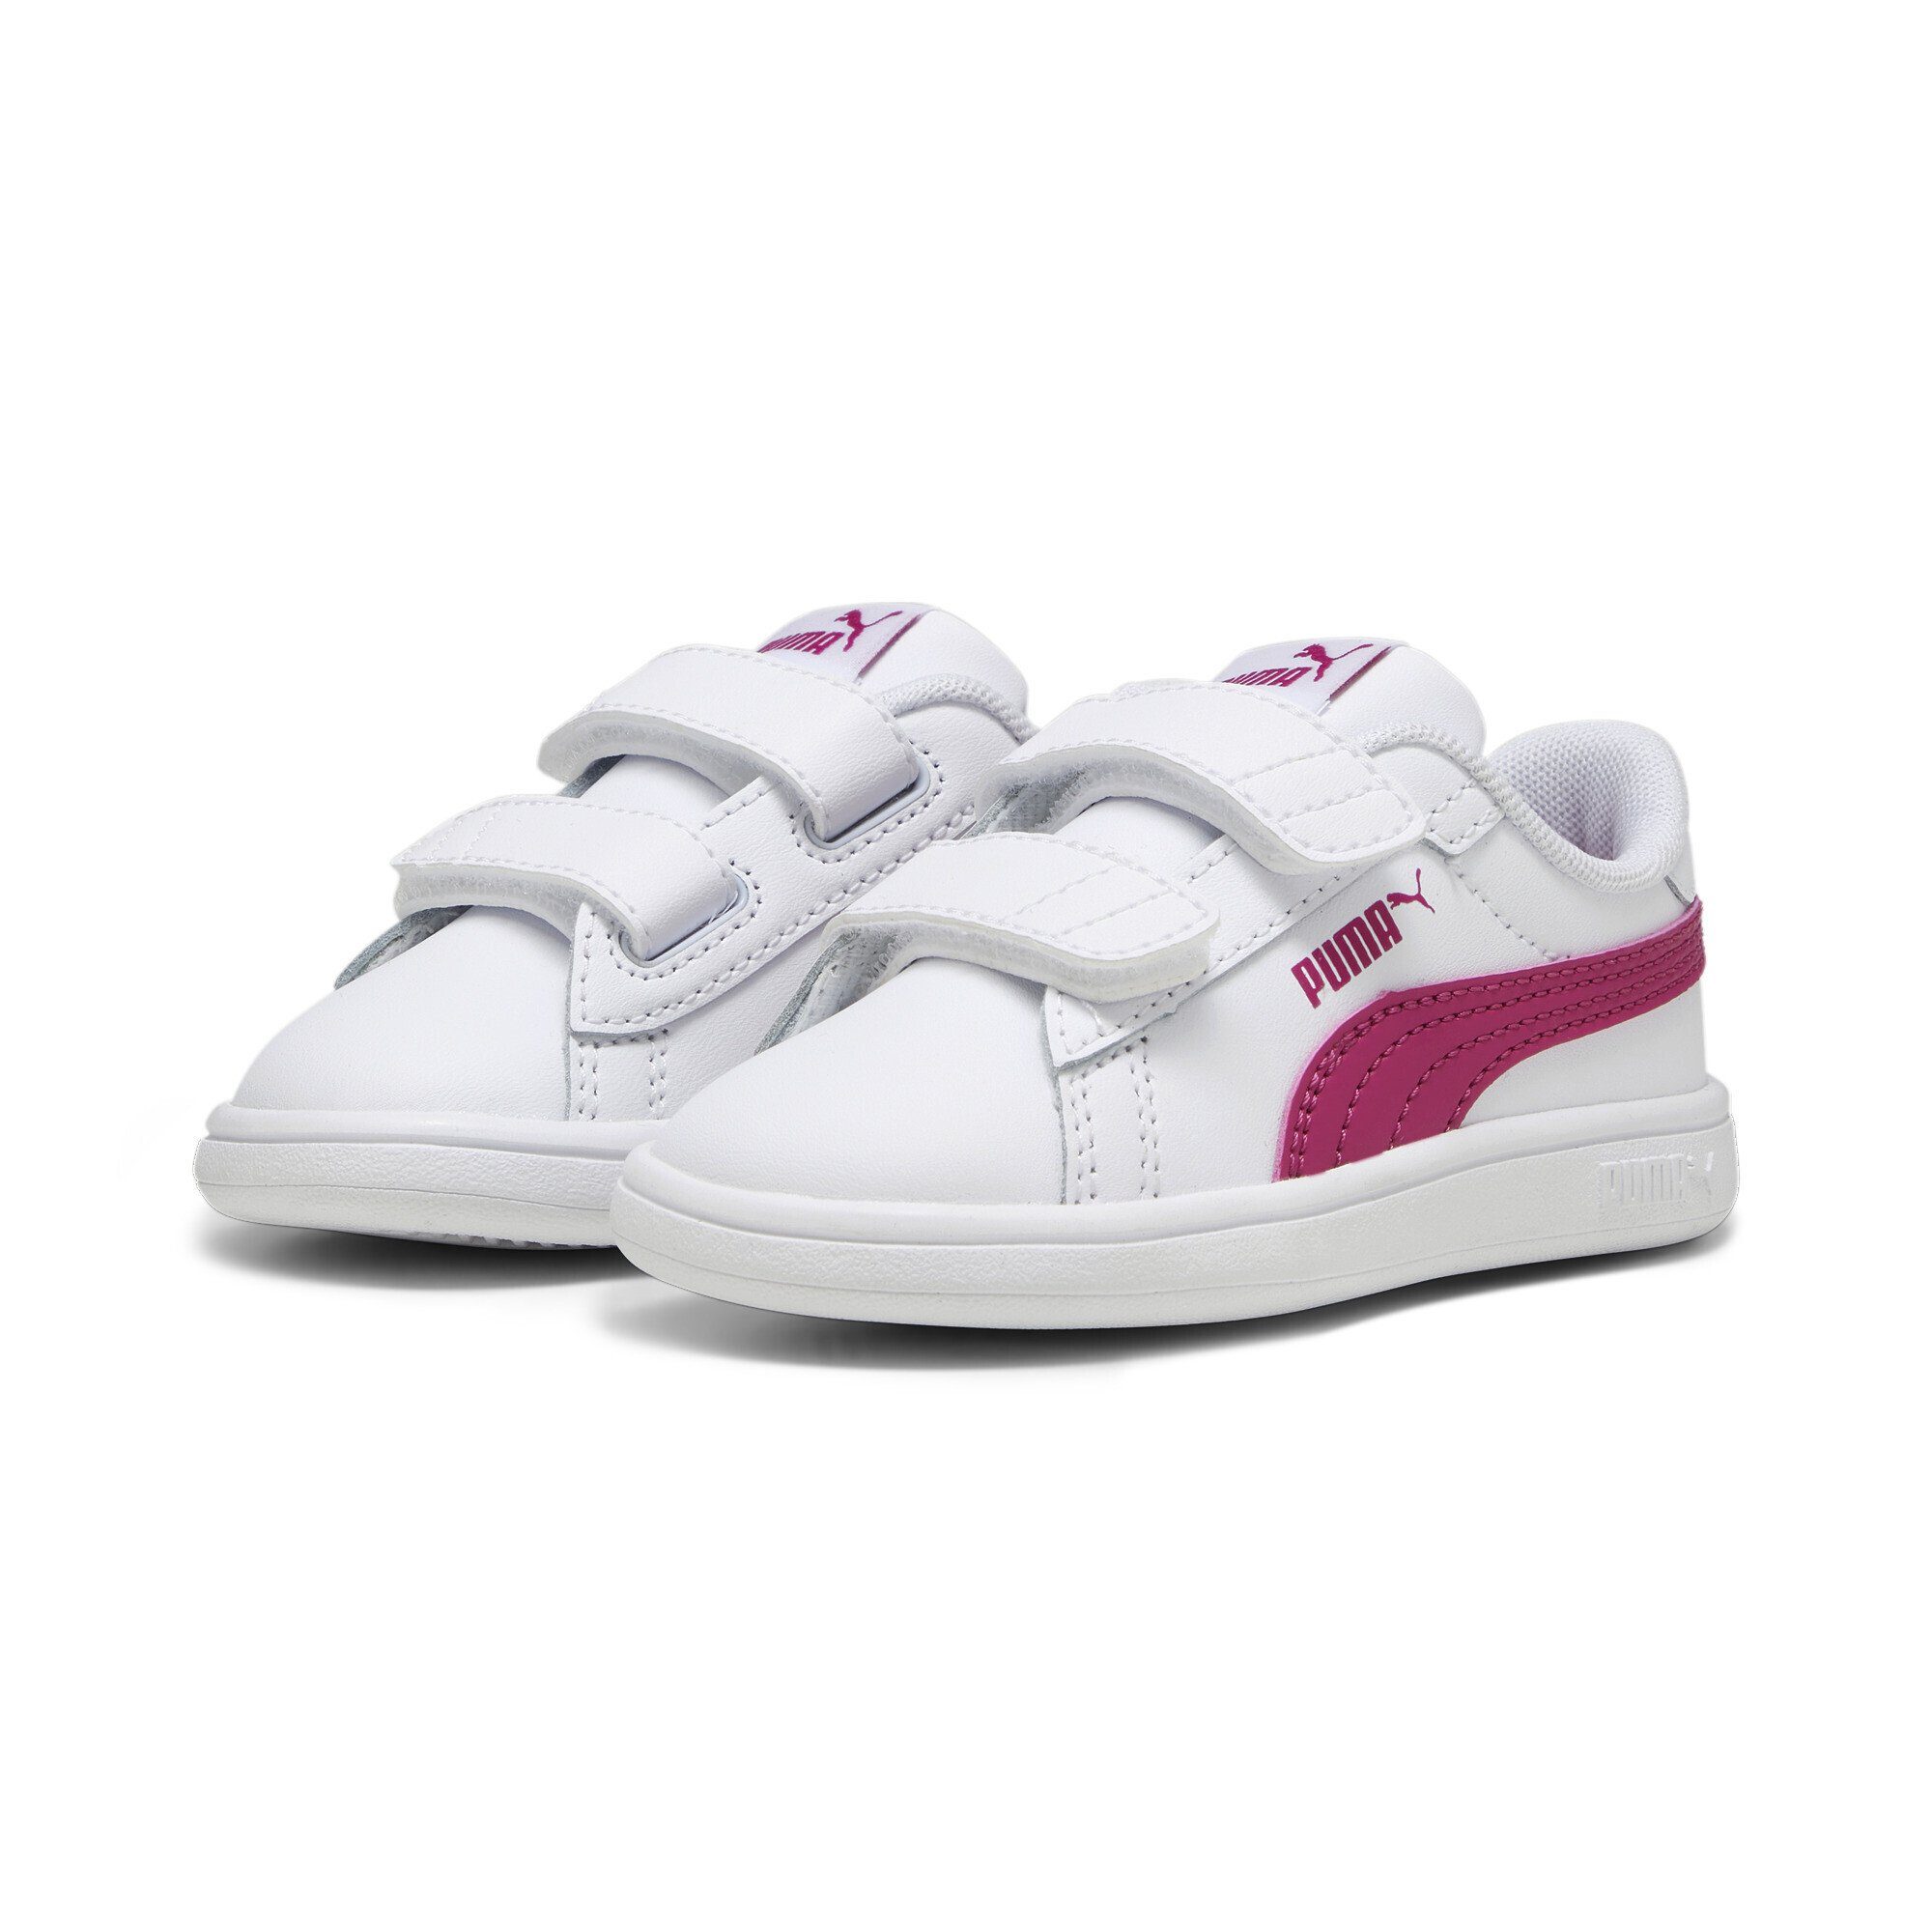 Pink 3.0 Sneaker Pinktastic V Sneakers Kinder Leather Smash White PUMA